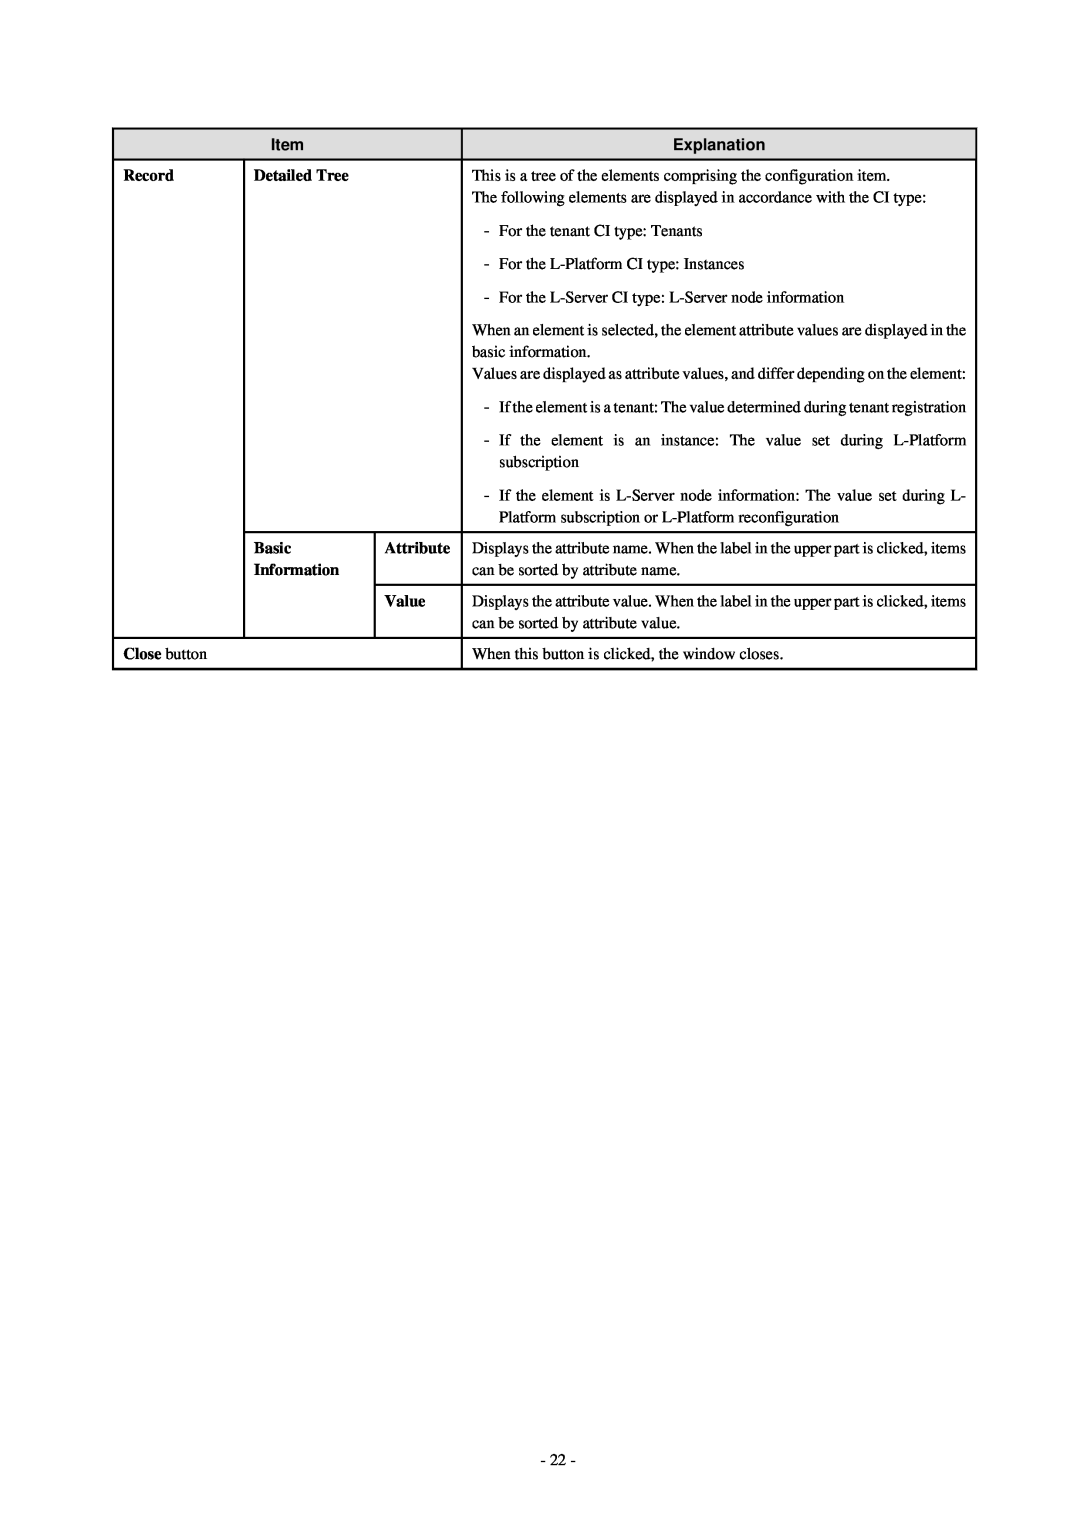 Fujitsu V3.0.0 manual Explanation, Record, Detailed Tree, Basic, Attribute, Information, Value, Close button 